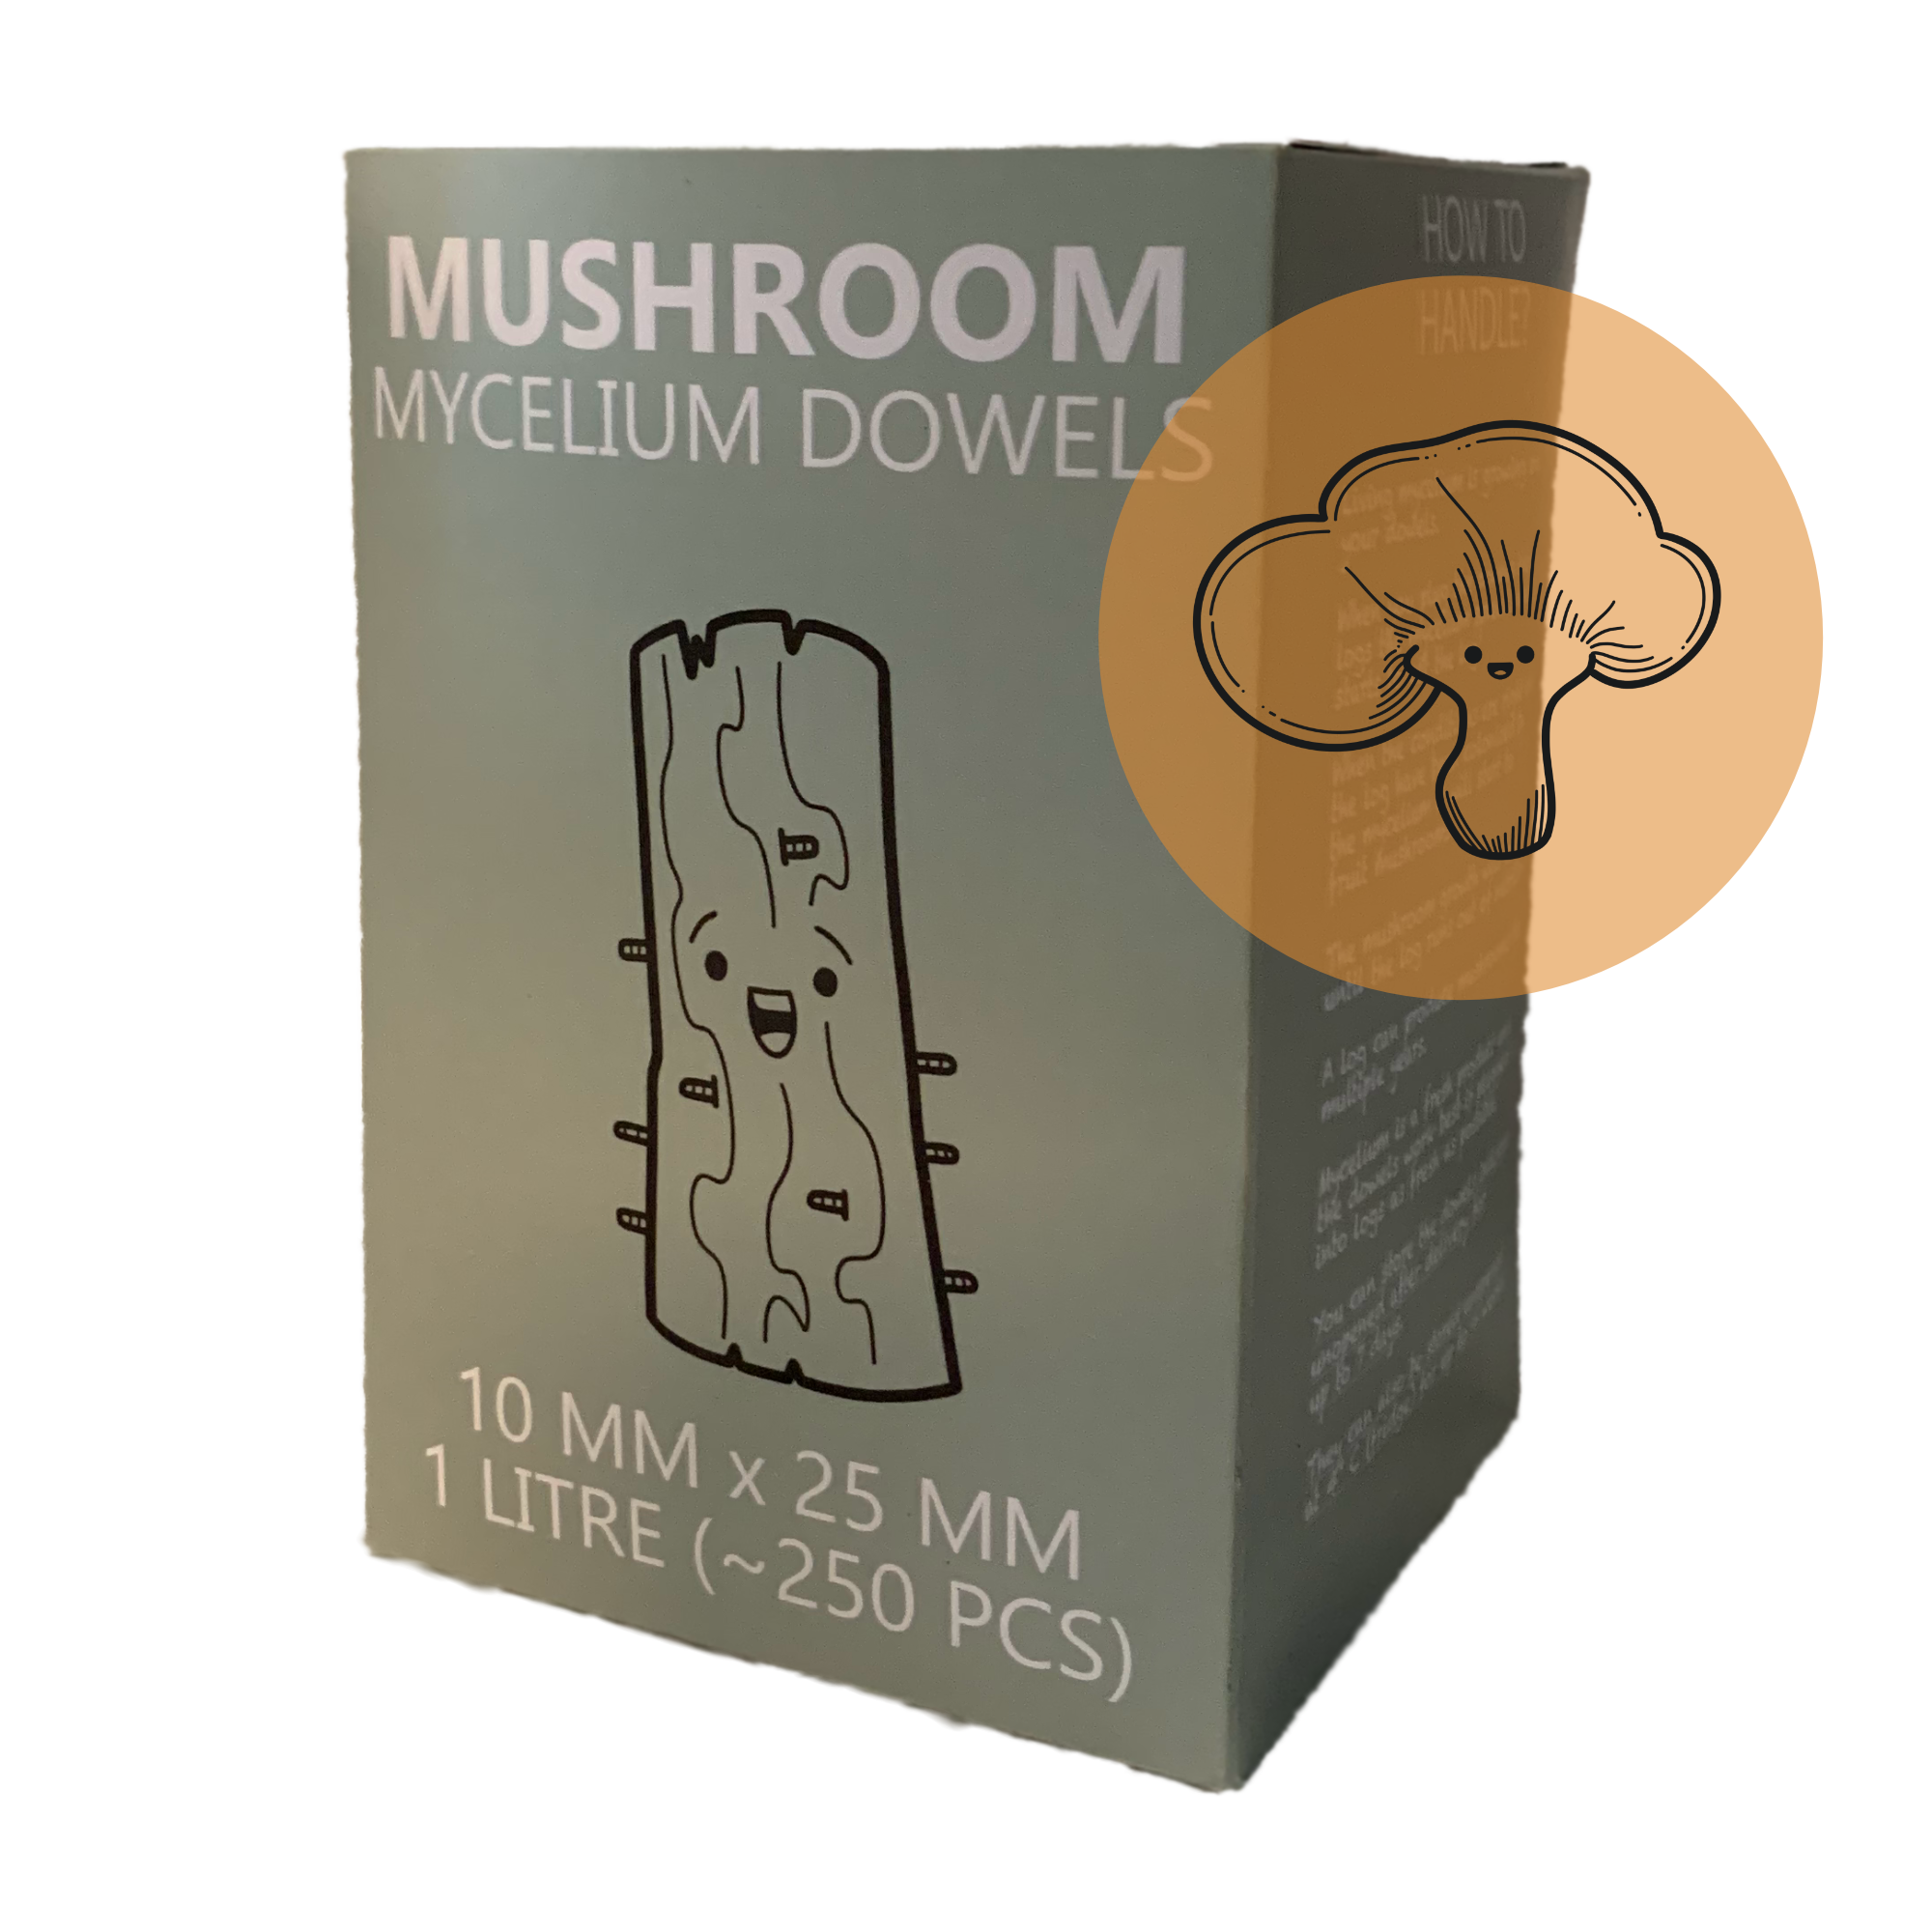 Reishi mushroom dowels